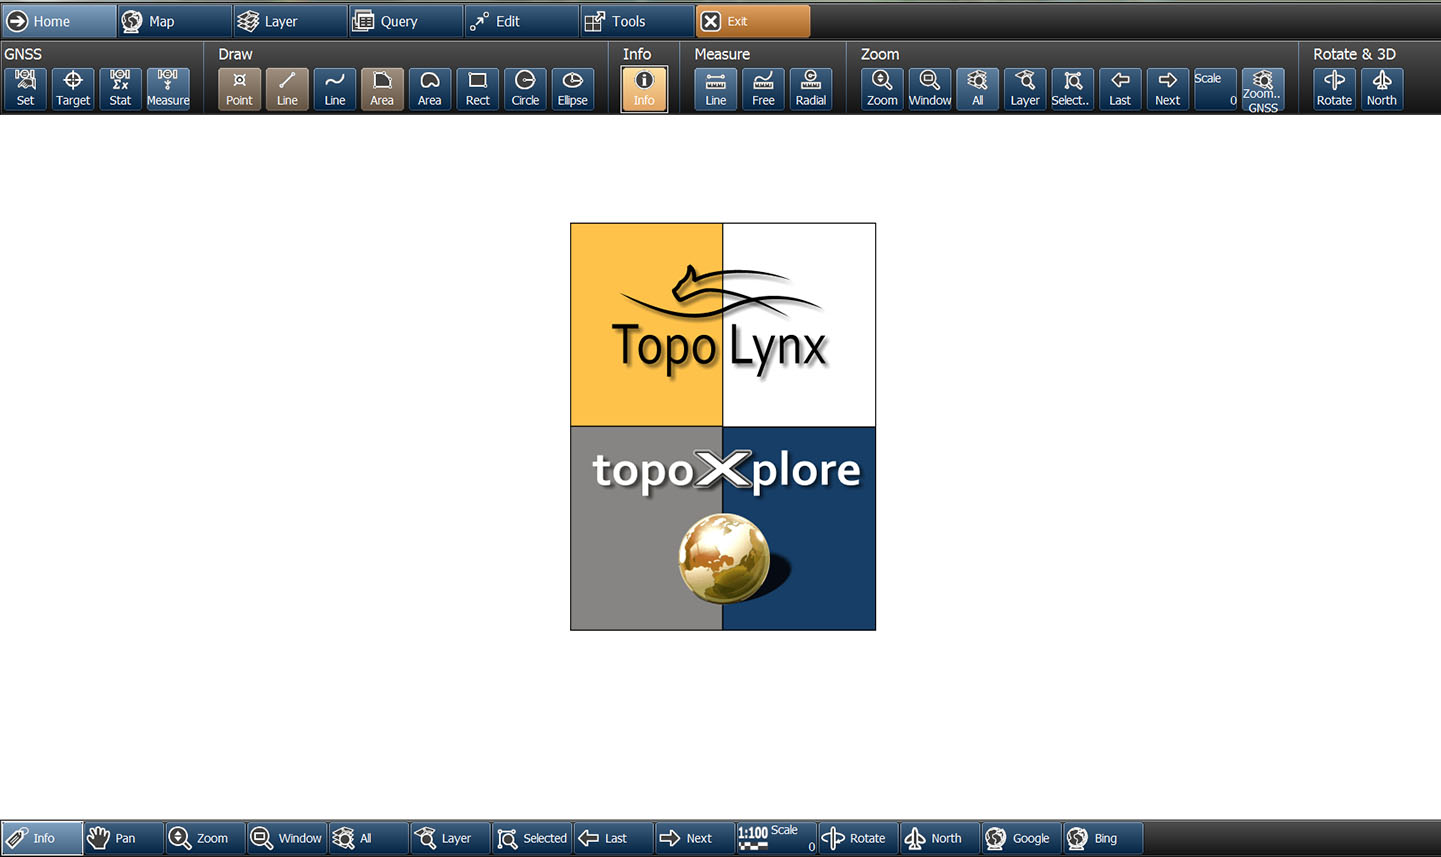 Main window of topoXplore and the splash screen